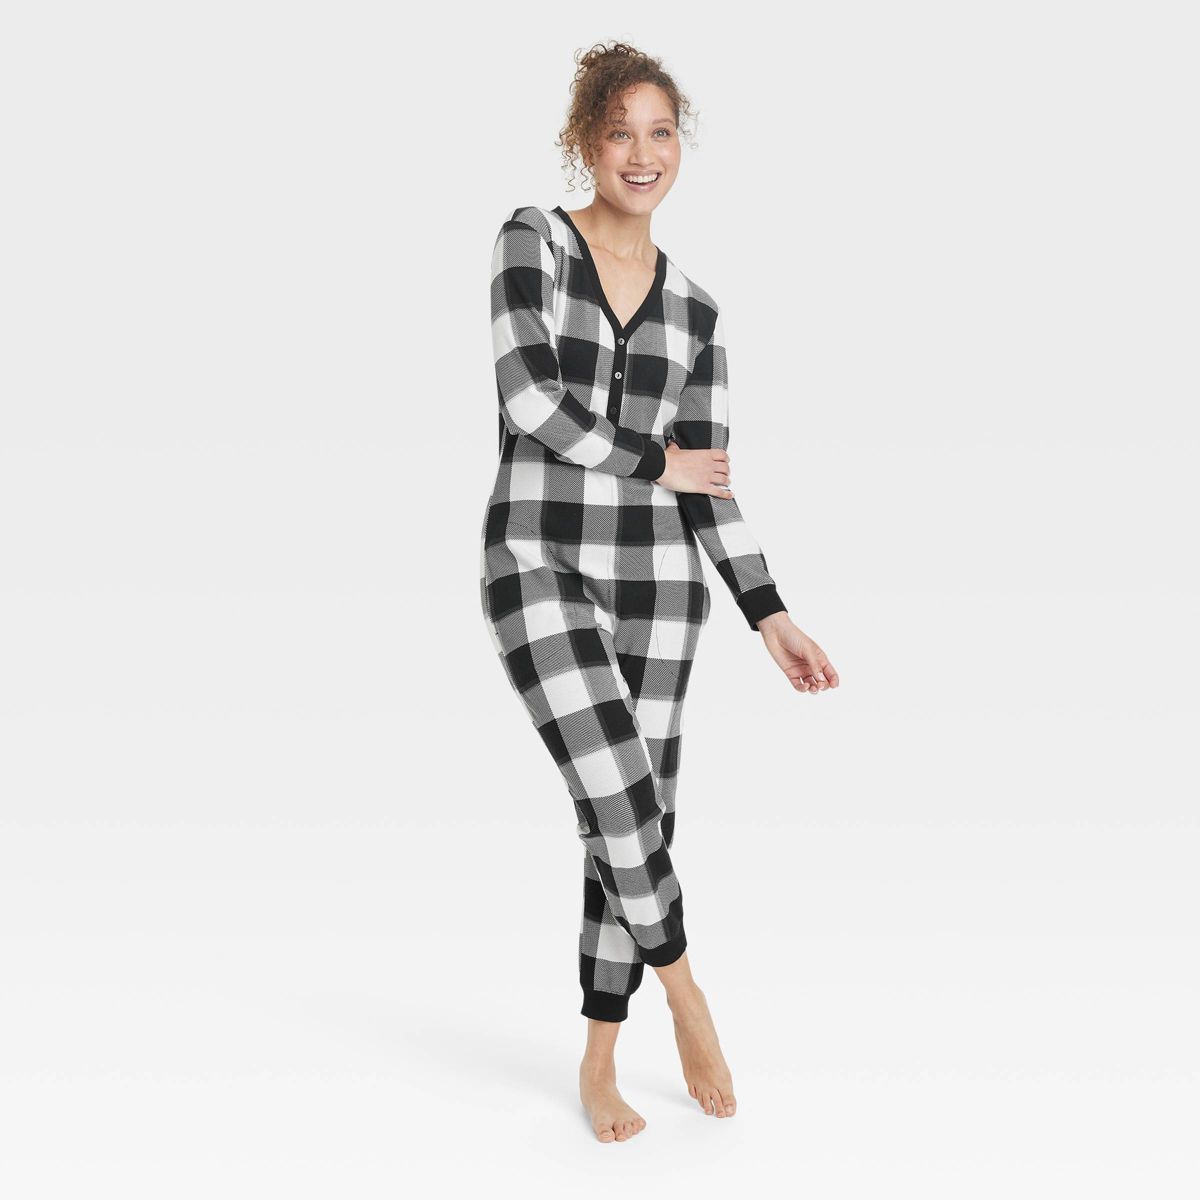 Women's Thermal Pajama Union Suit - Stars Above™ | Target